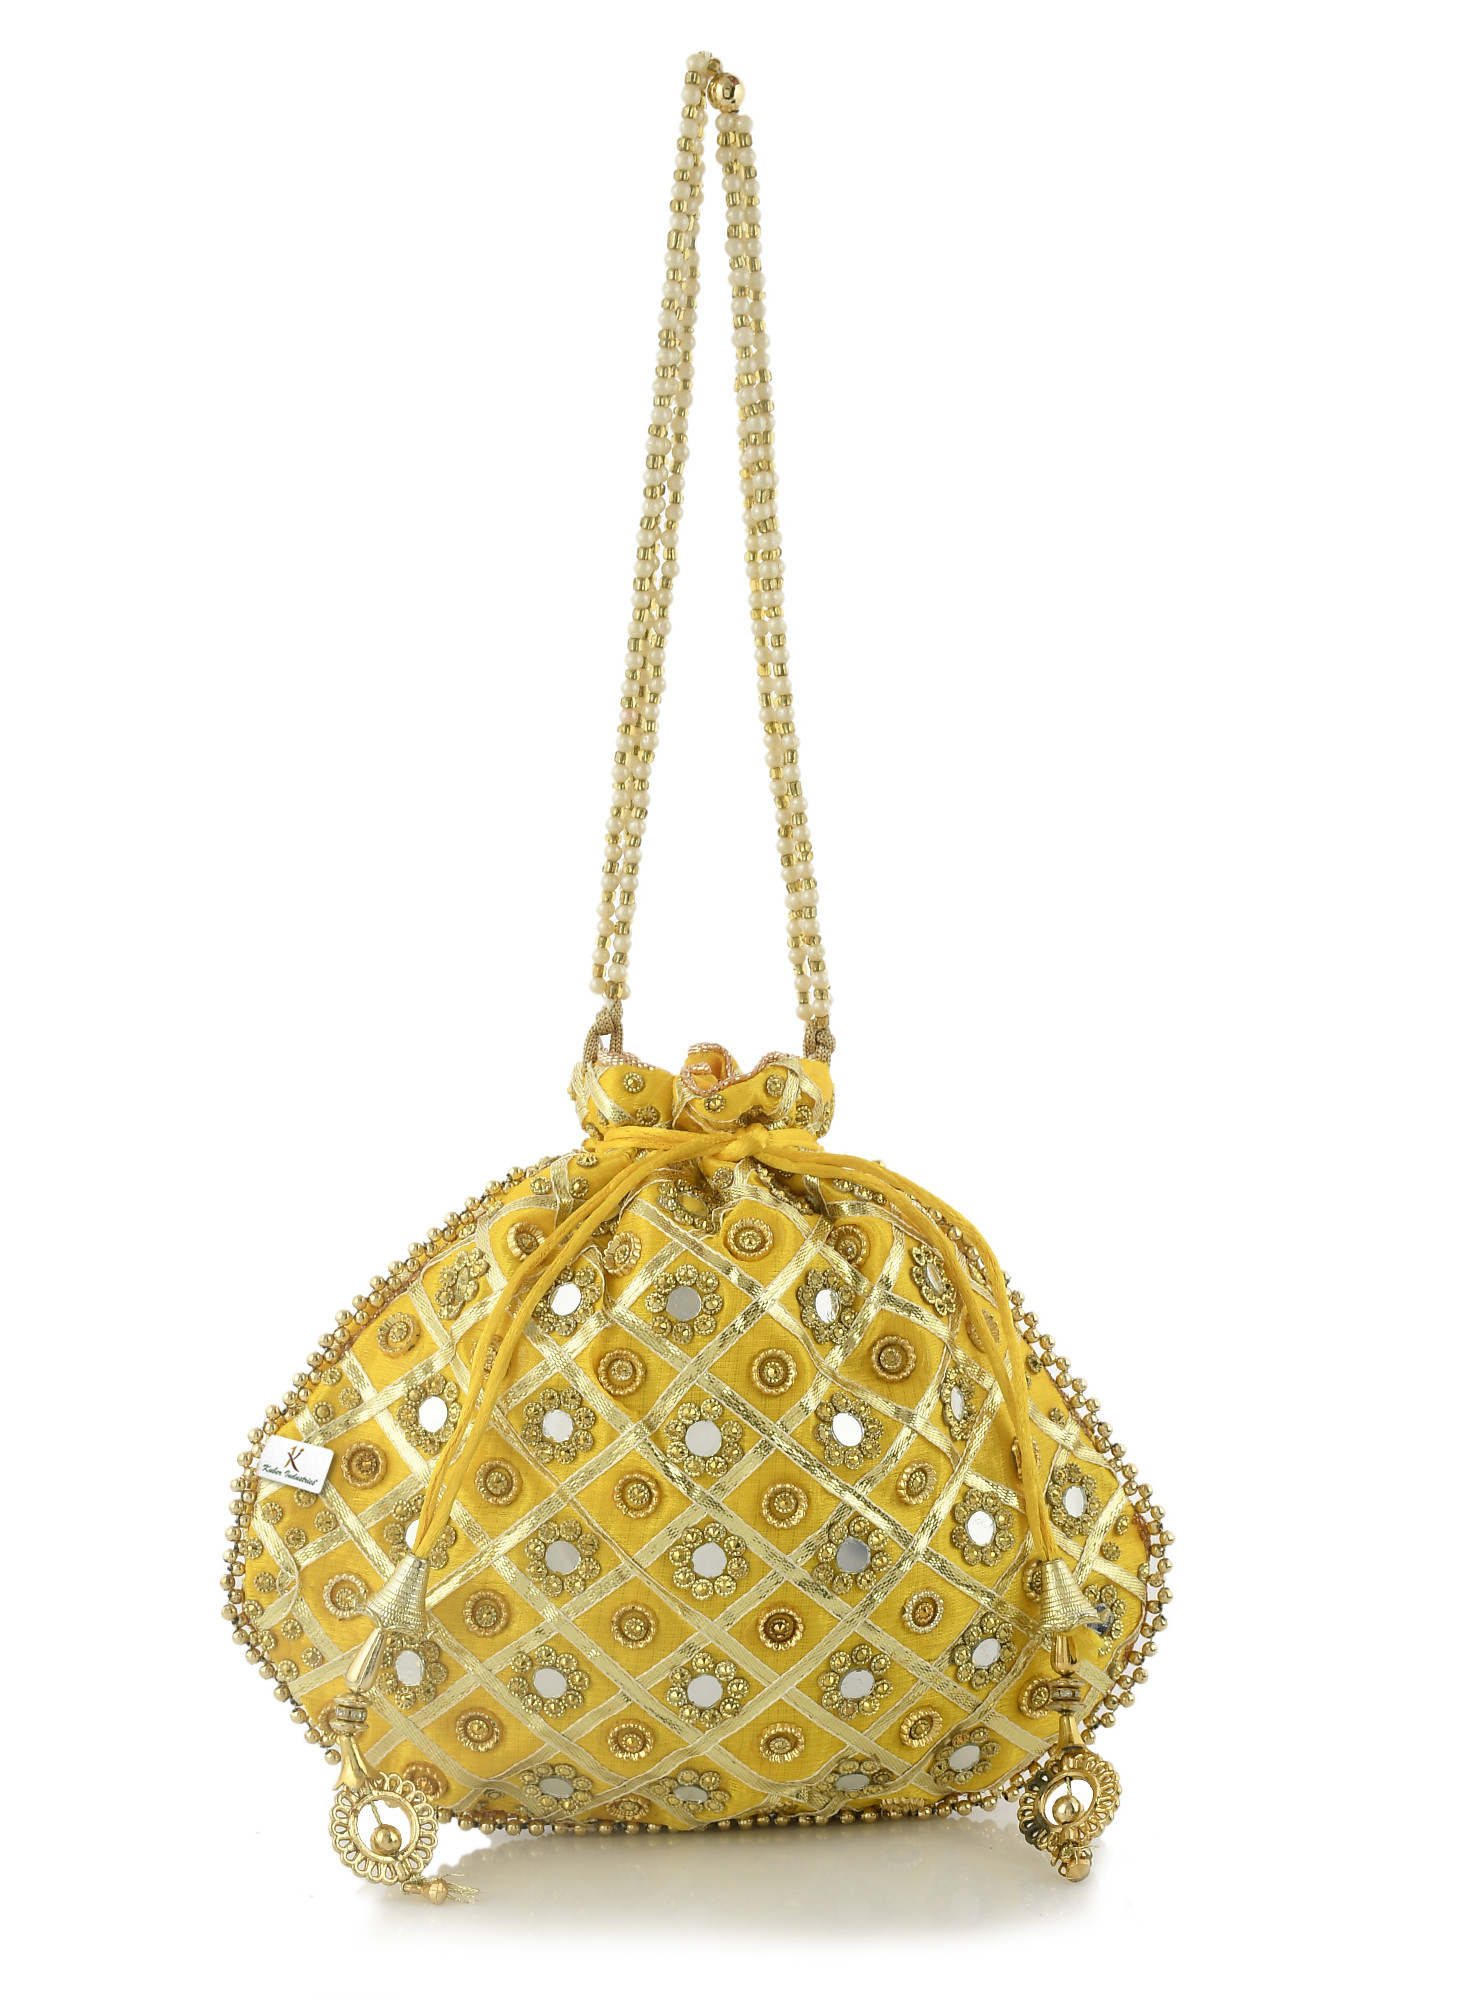 Kuber Industries 2 Pieces 3-Layer Silk Traditional Mirror Work Clutch Potli Batwa Pouch Hand Bag For Women/Girls (Gold & Pink)-KUBMRT11549